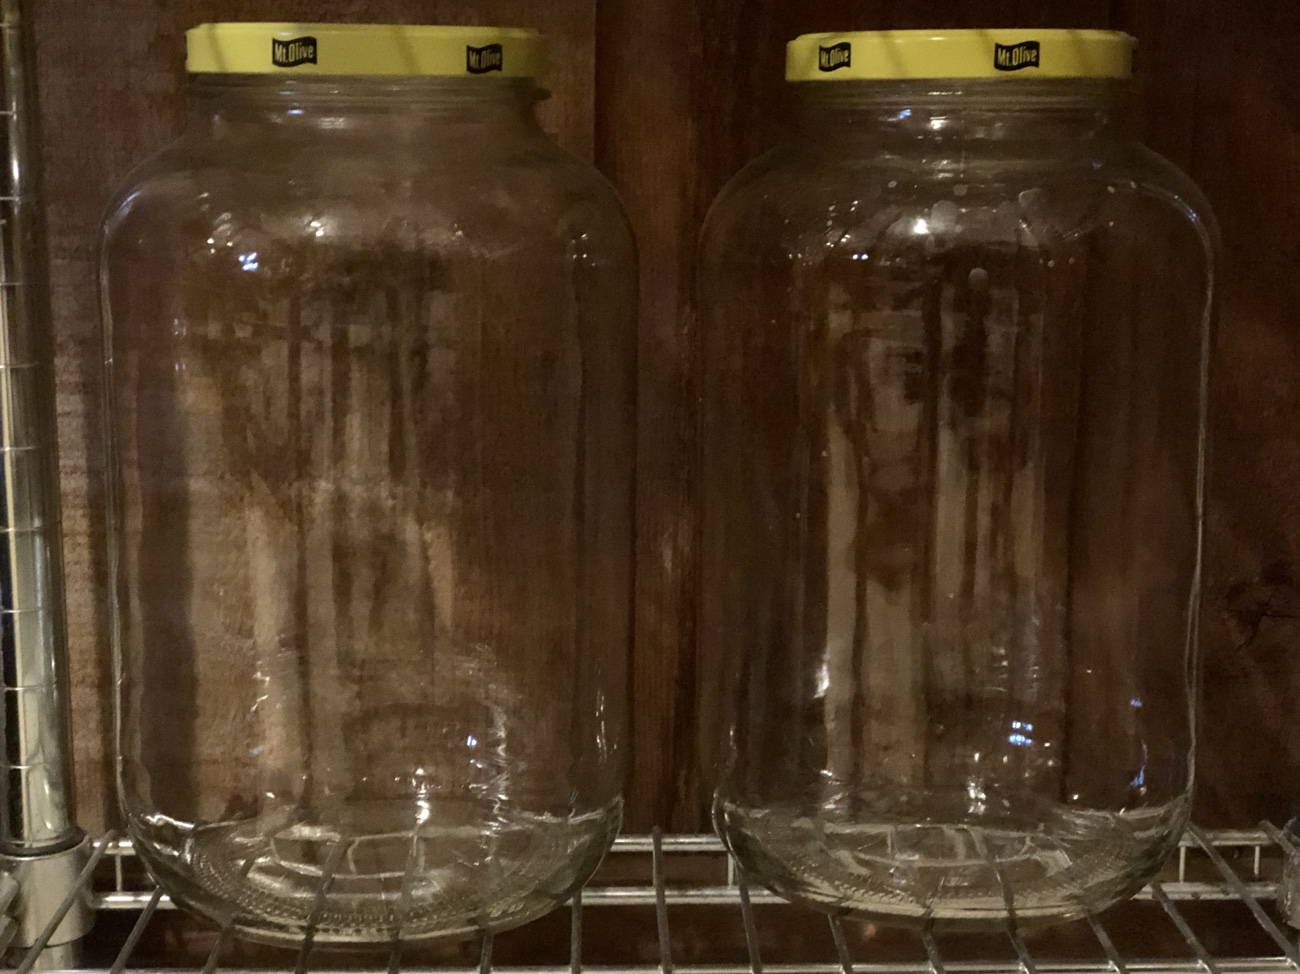 Repurposed Glass Jars as Unique Kitchen Storage